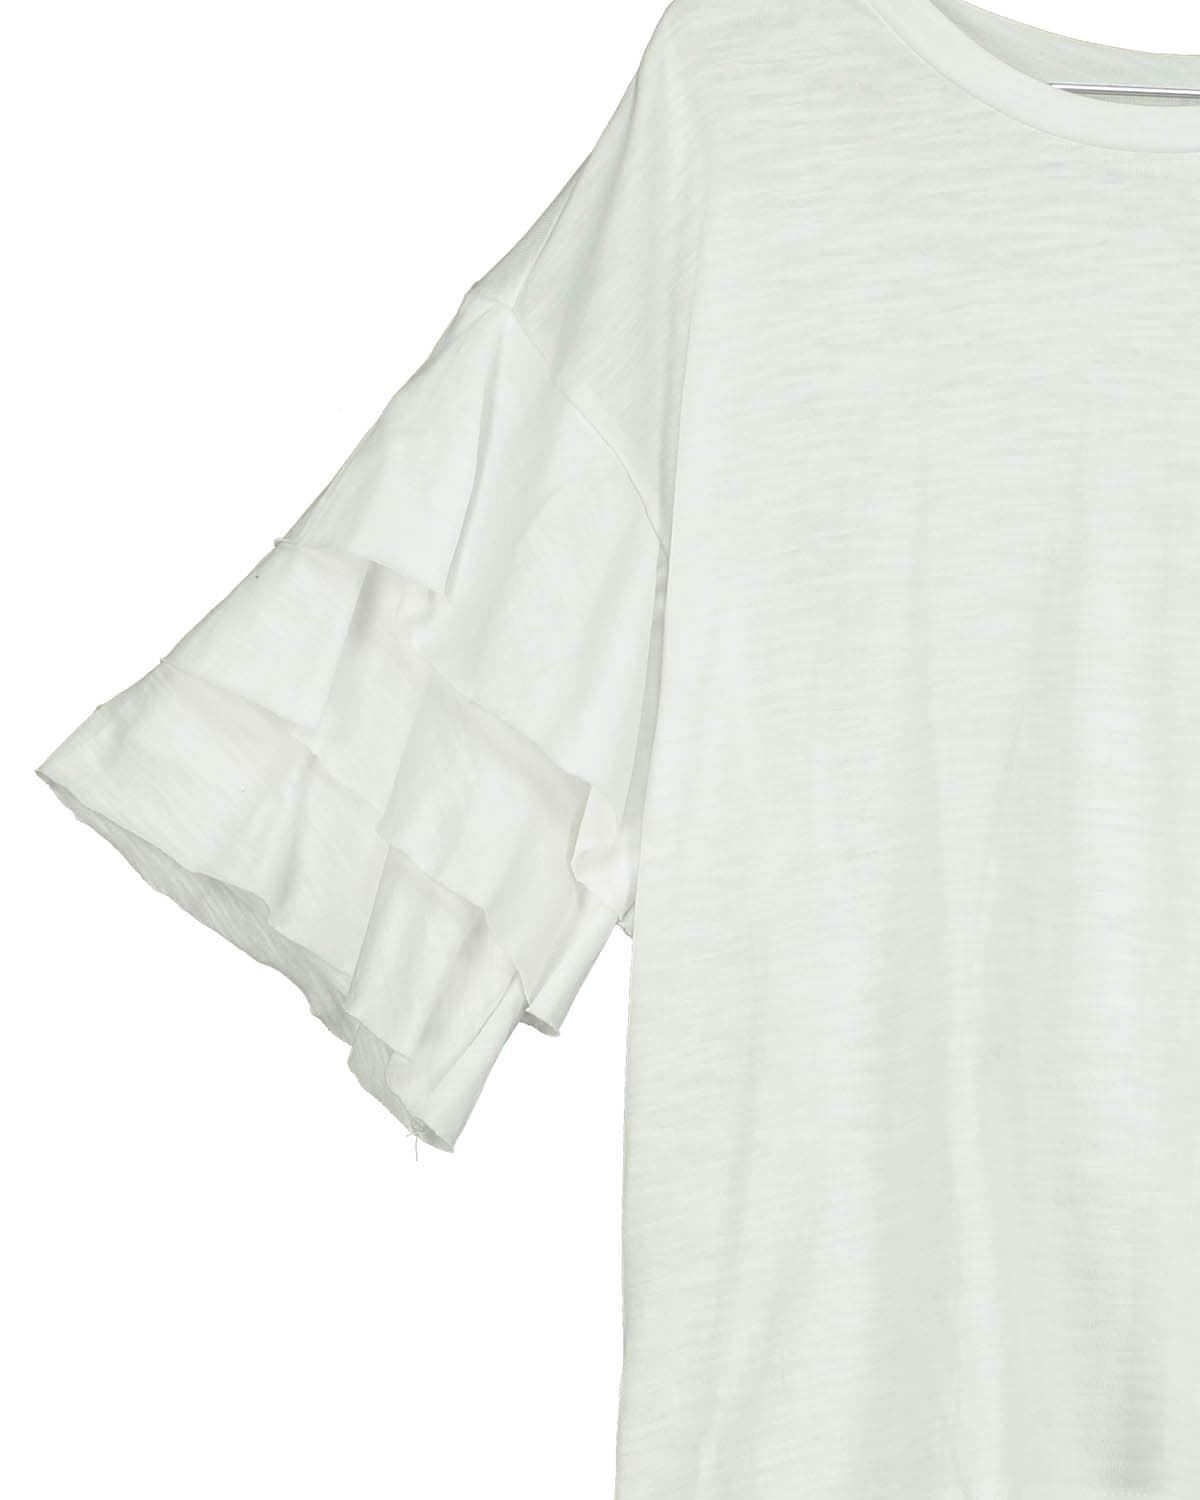 Camiseta blanca manga corta. - Imagen 2